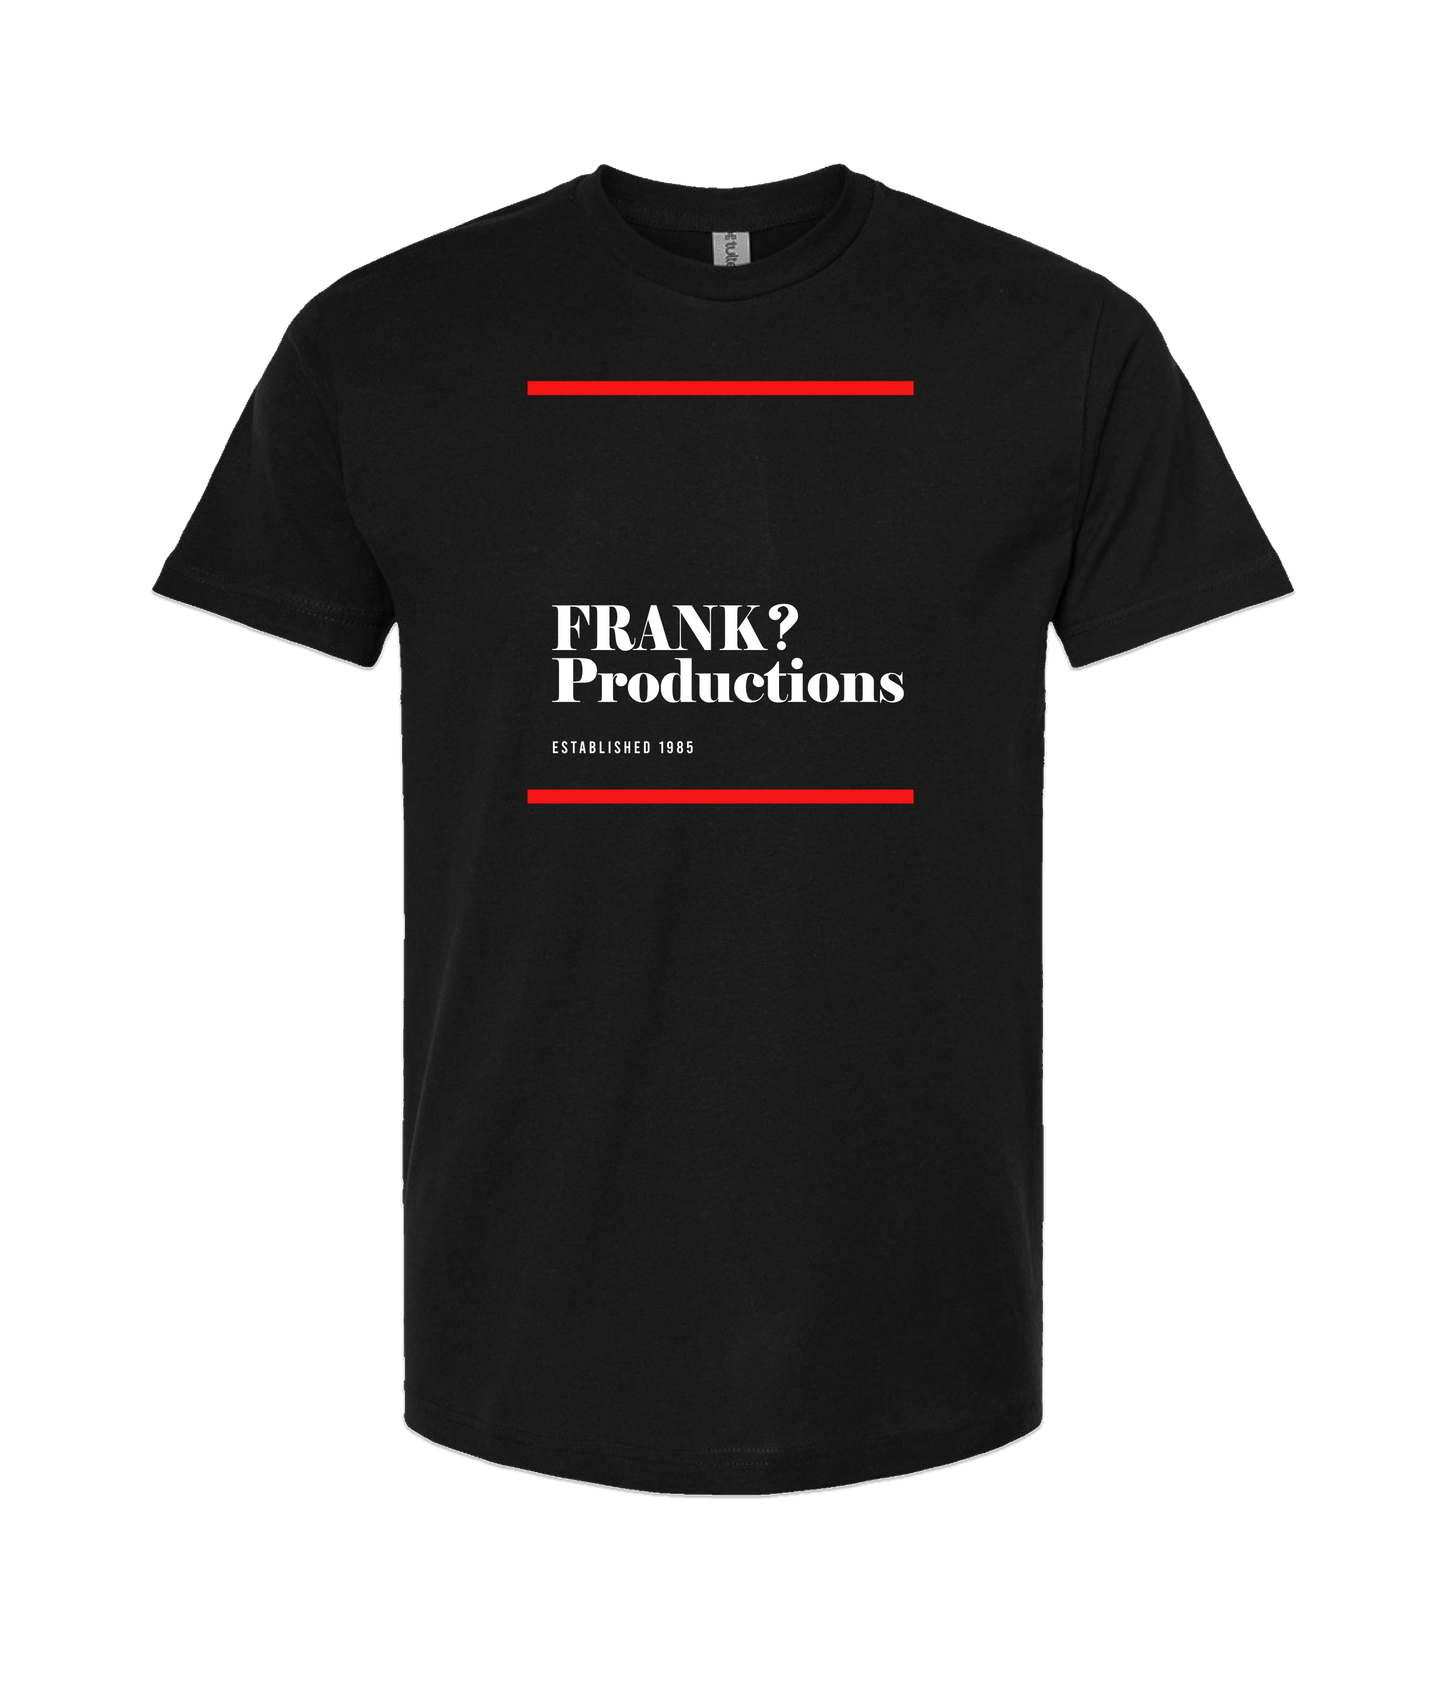 FRANK? Piccolella - Established 1985 - Black T Shirt